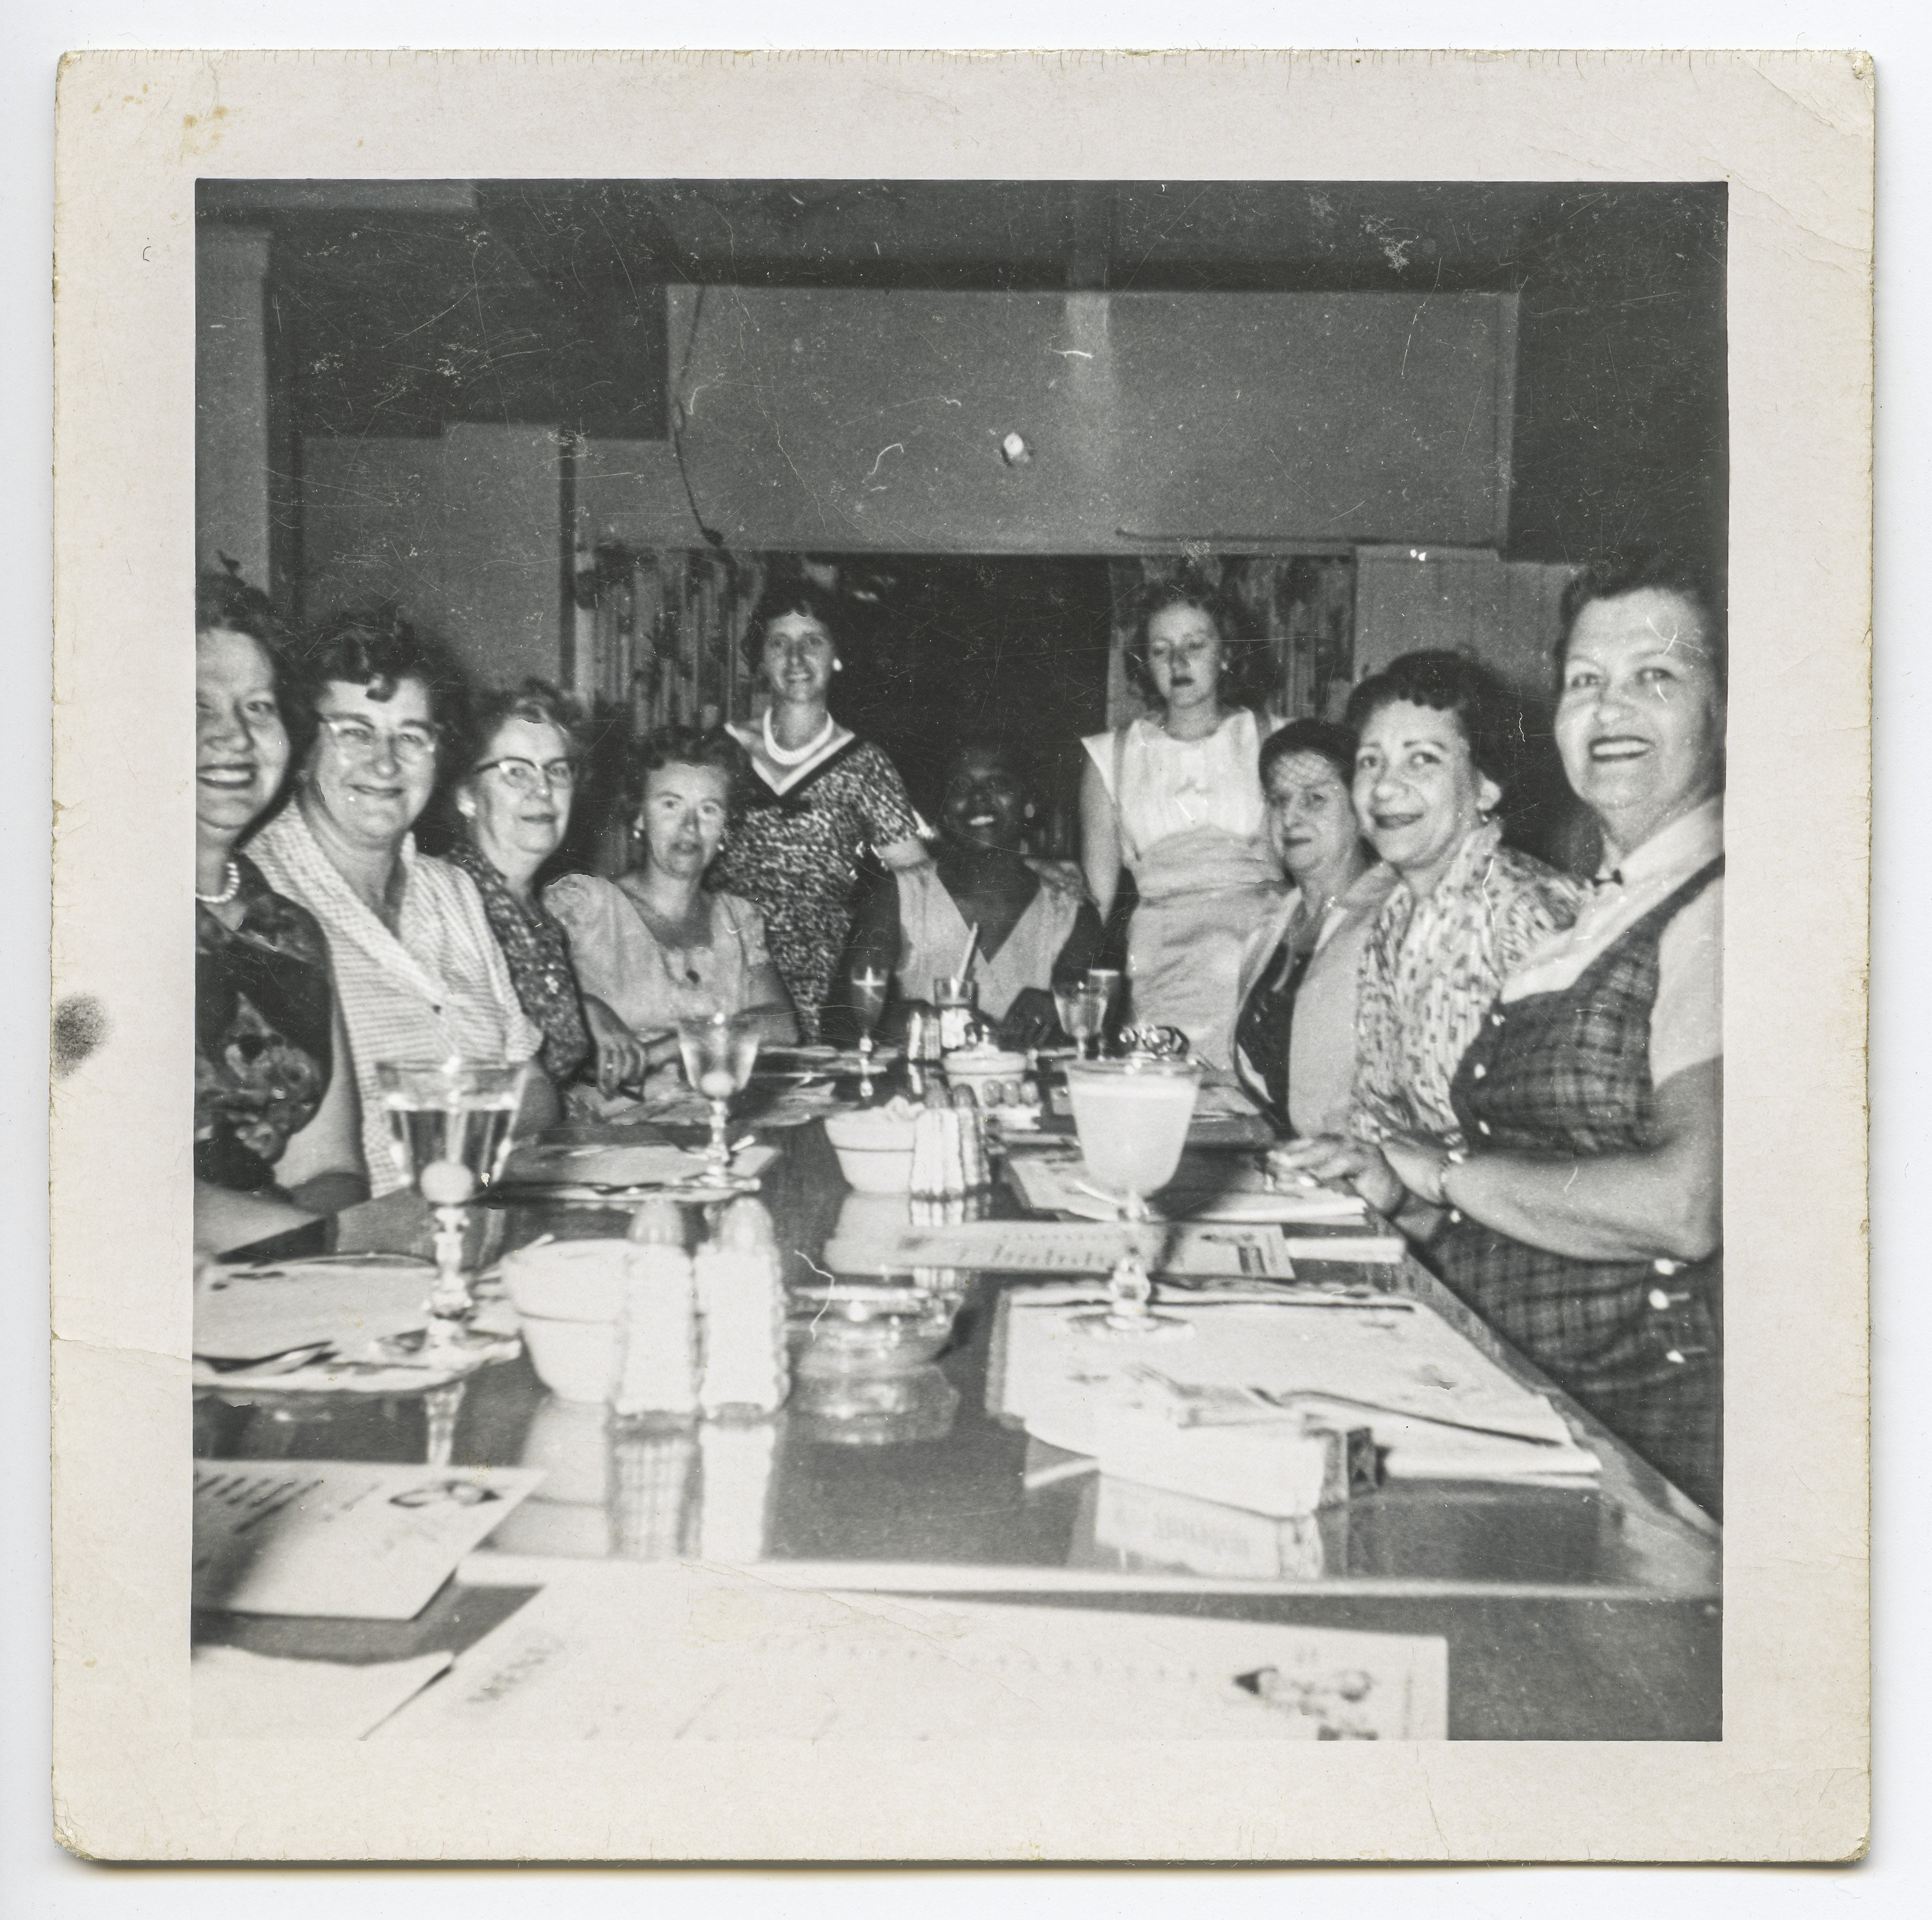 Work luncheon 1950s.